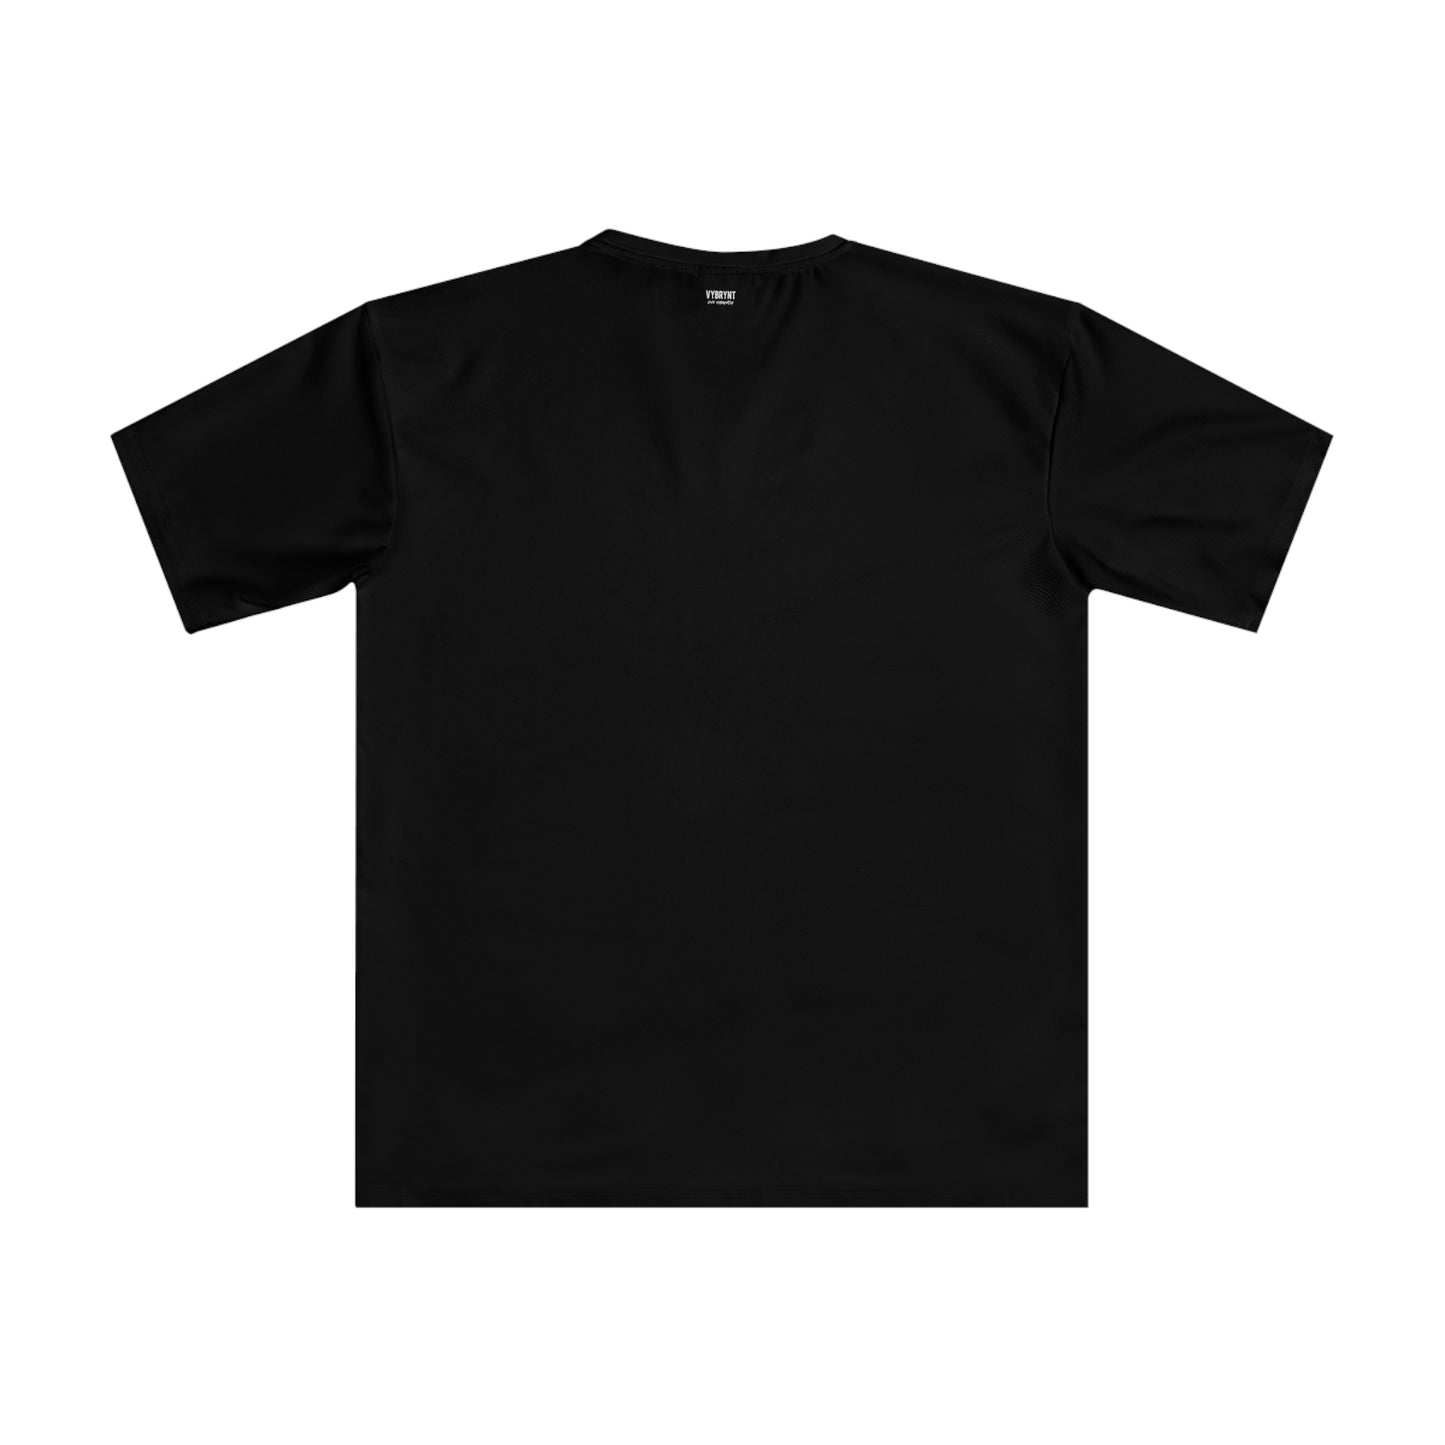 Fear God Men's Black T-shirt